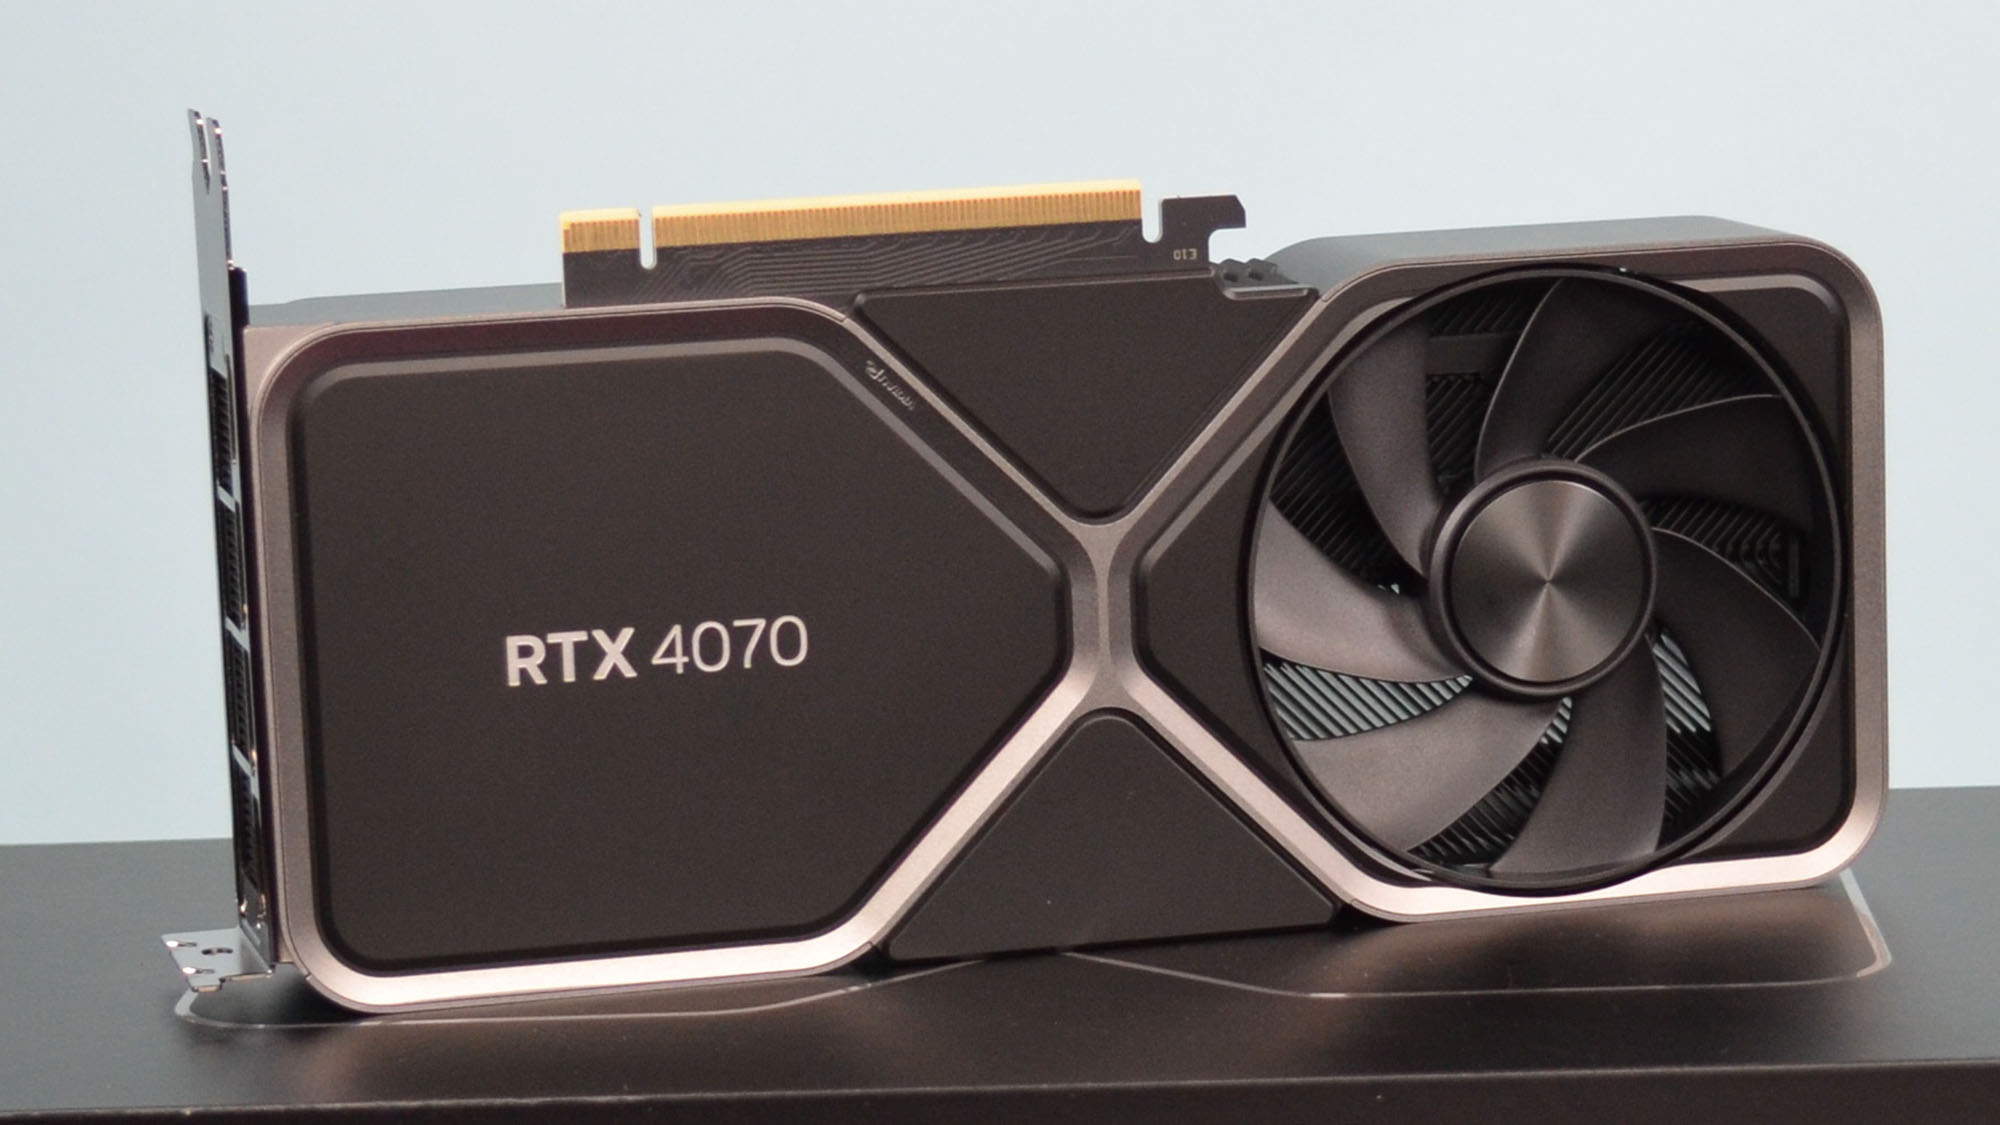 An Nvidia GeForce RTX 4070 graphics card